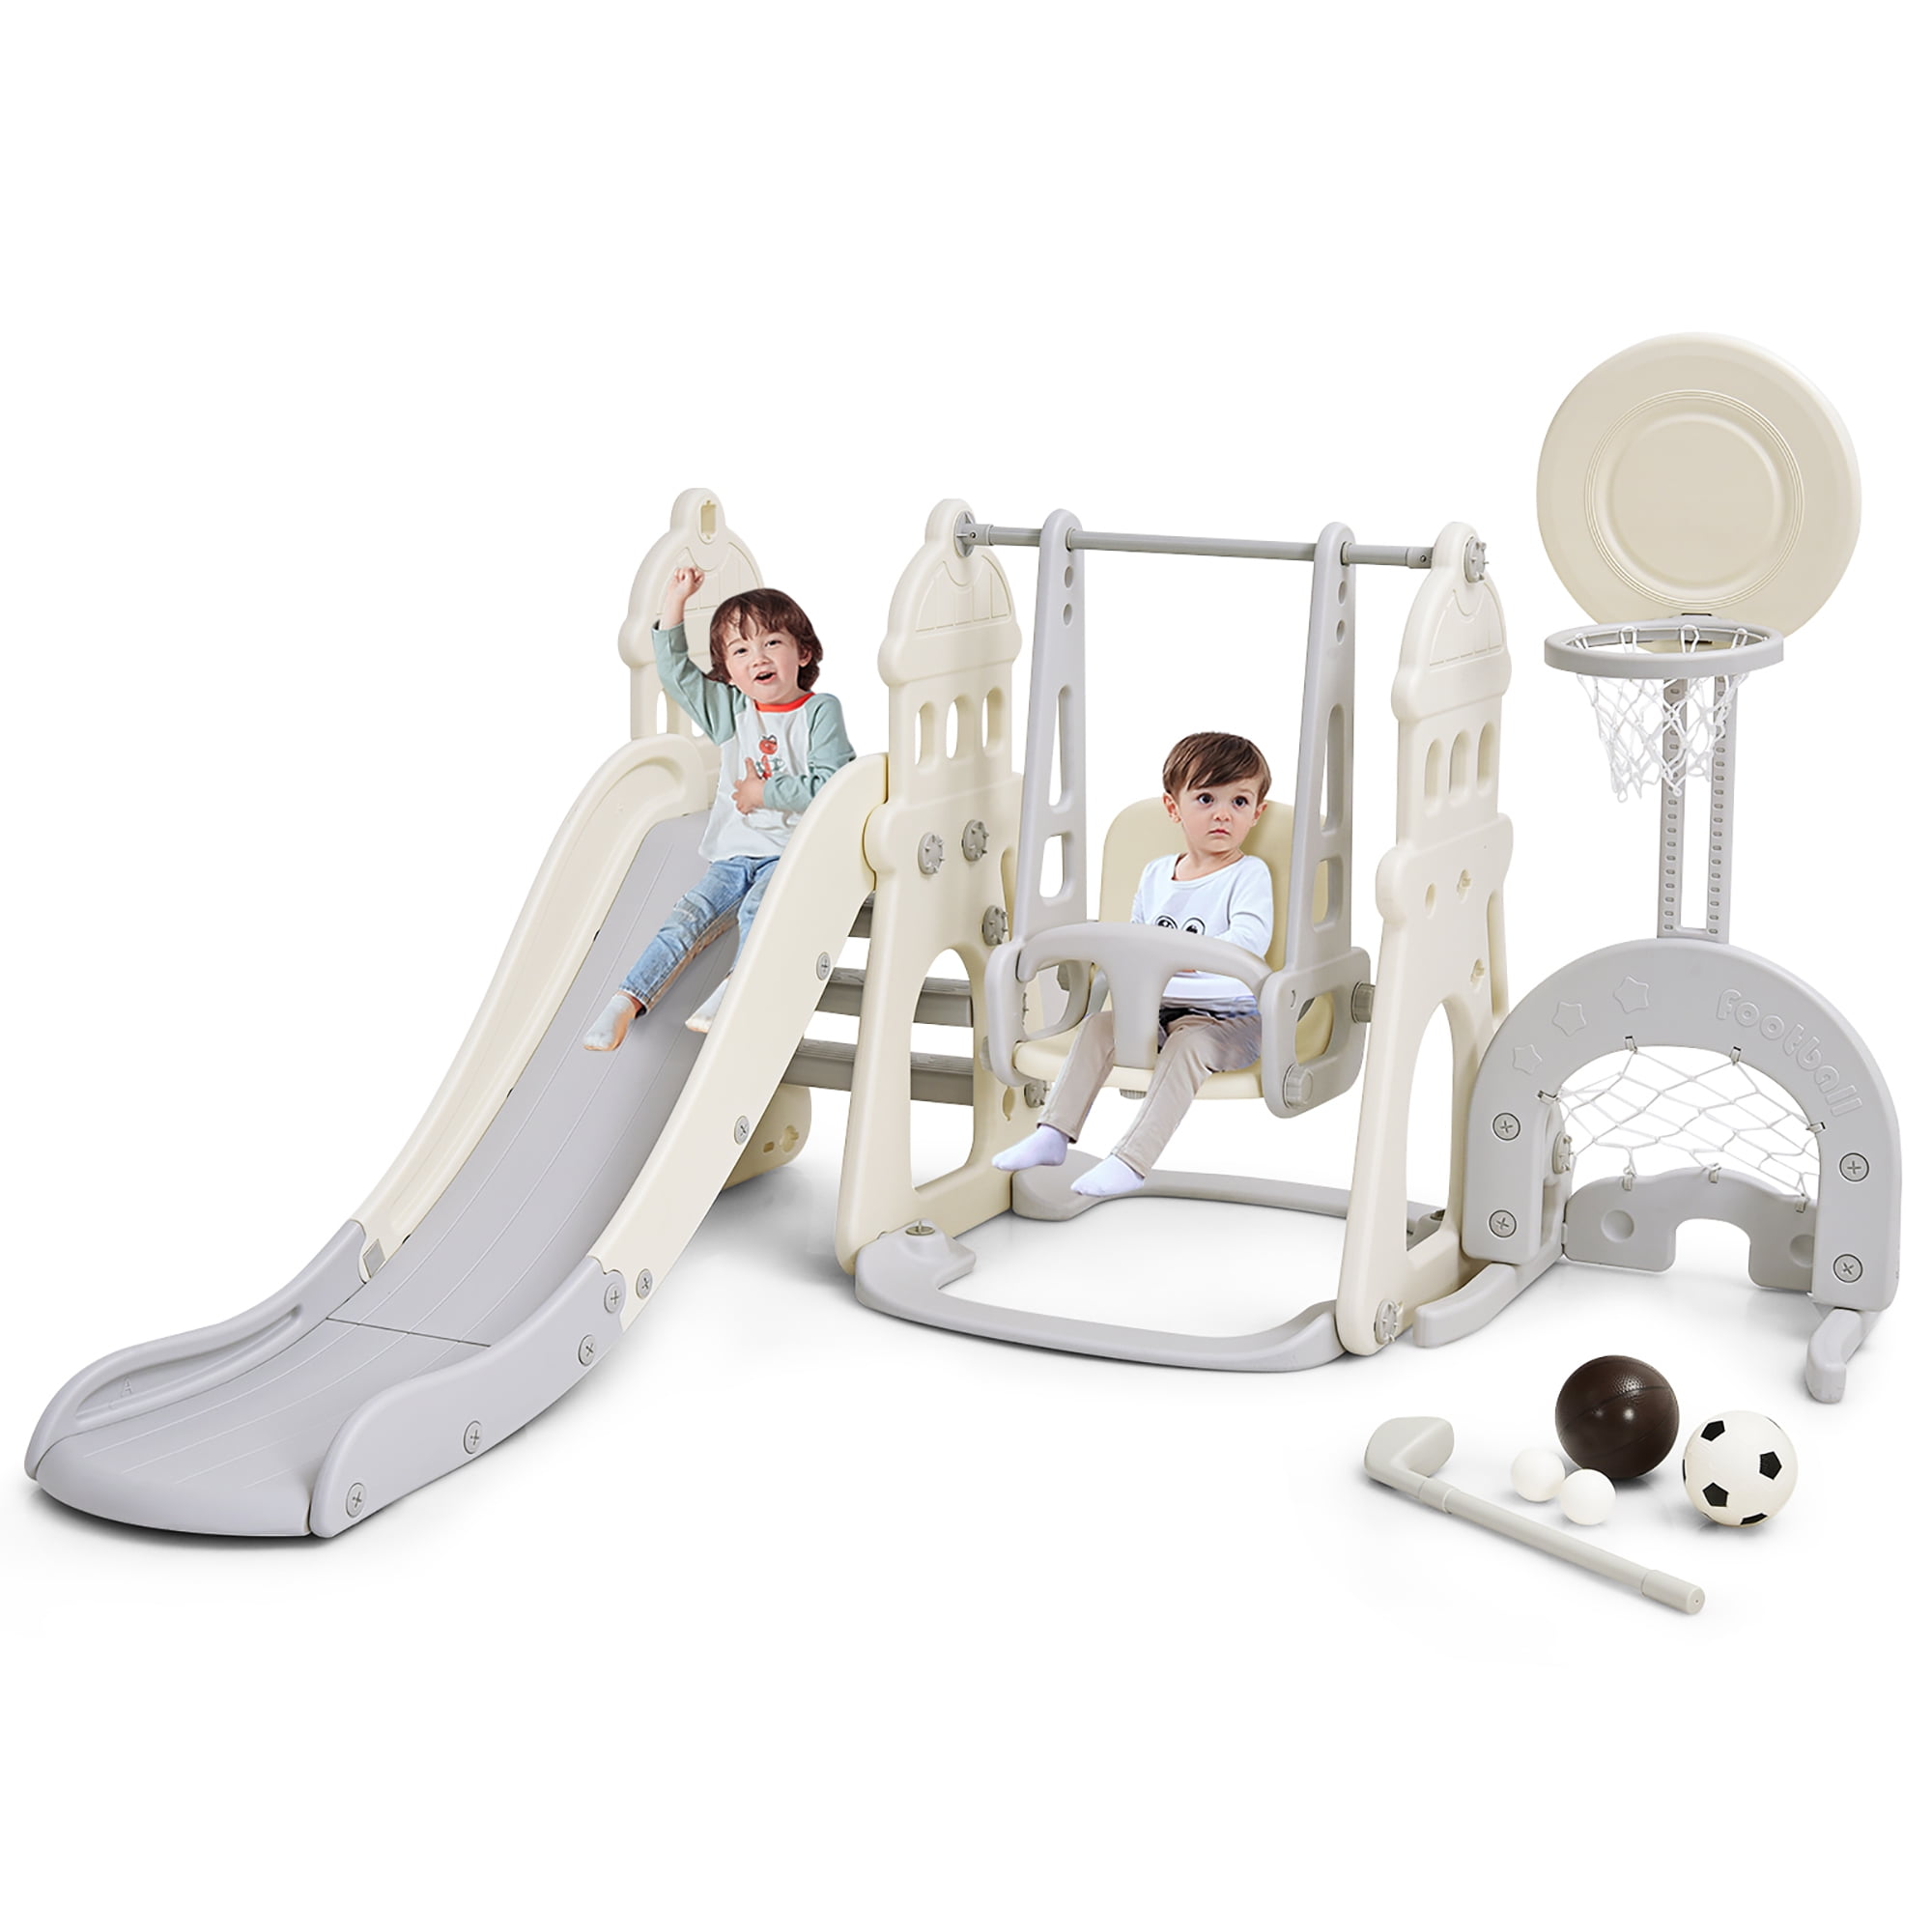 Easy Set Up for Both Indoors & Backyard Extra Long Slide and Ball Toddler Slide Combination Set Safety Seat Pink 3 in 1 Climber Slide Playset Stable & Safe Base 